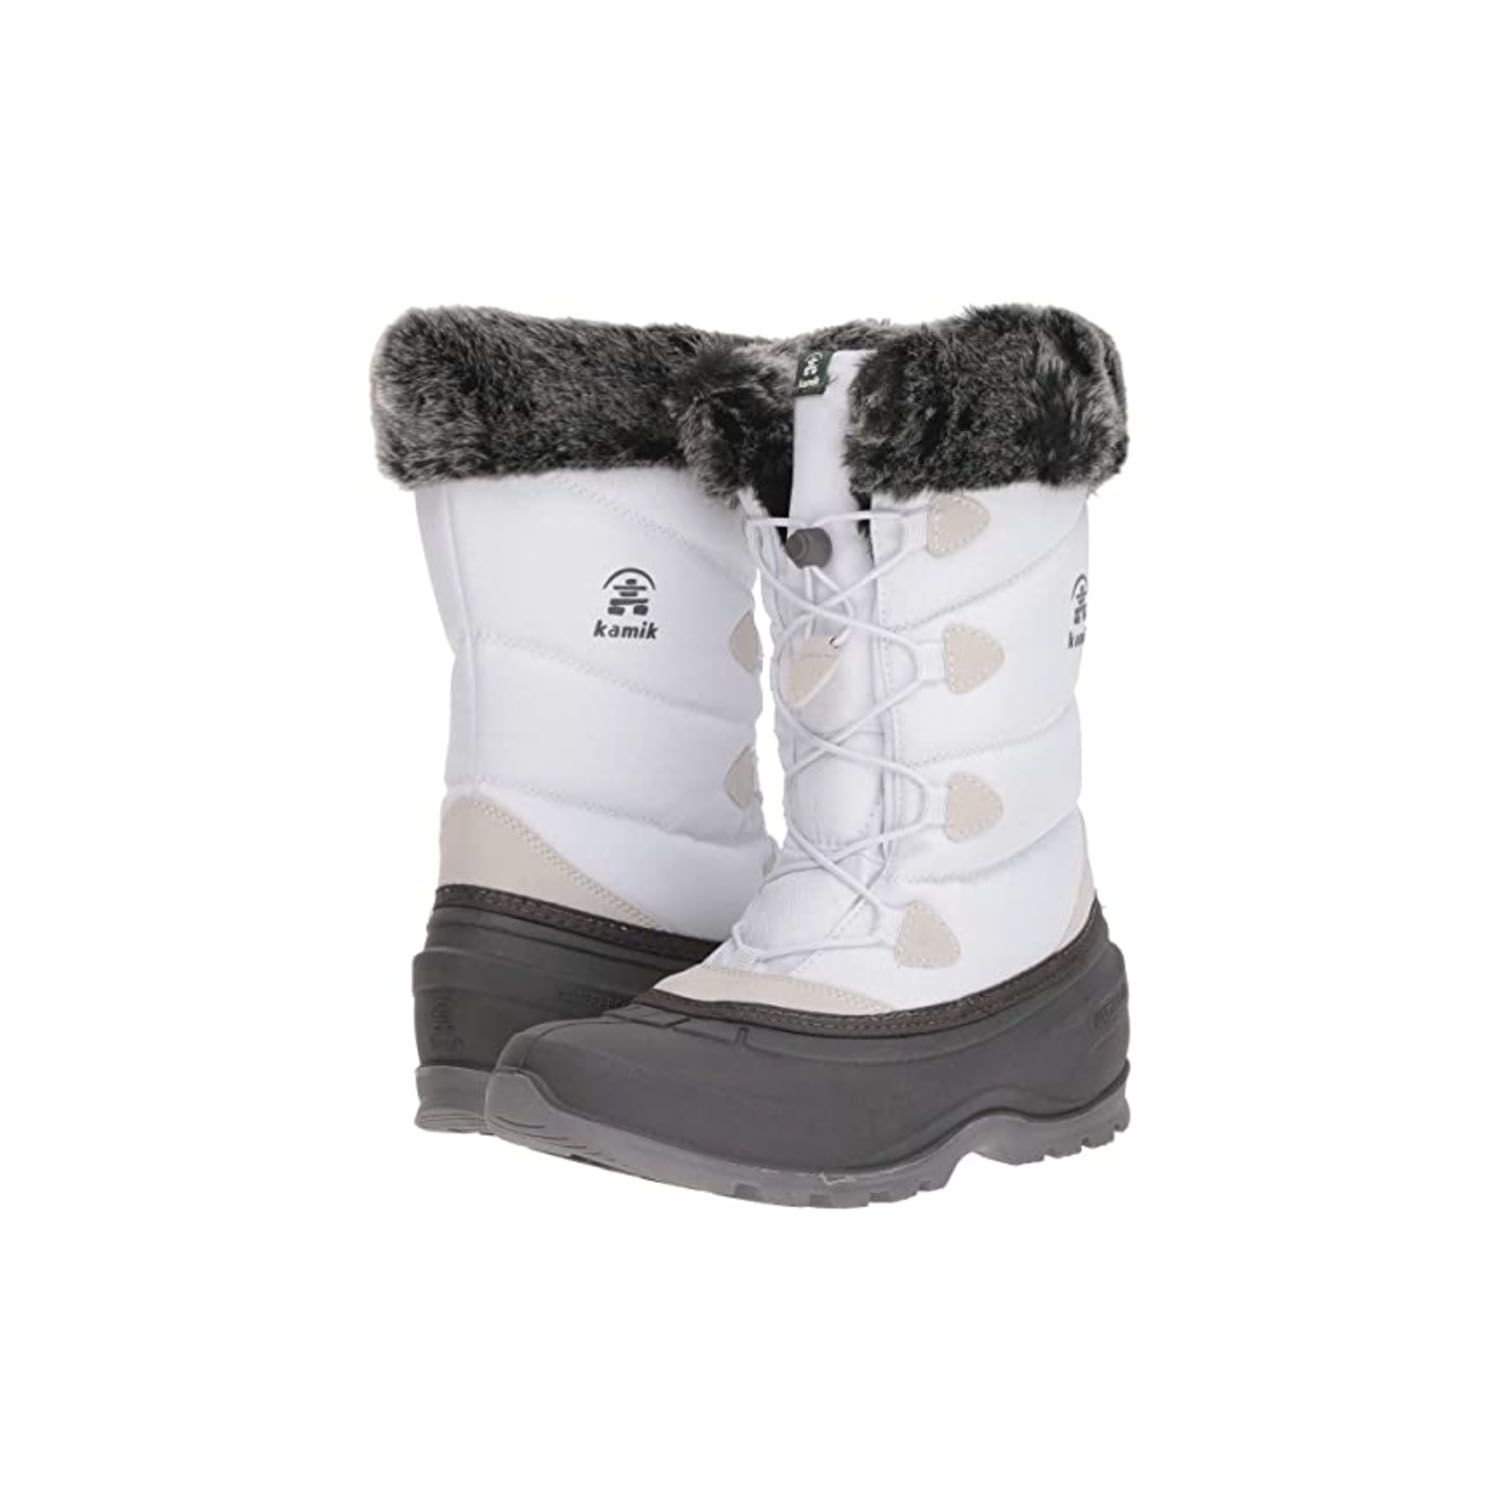 slip on snow boots womens